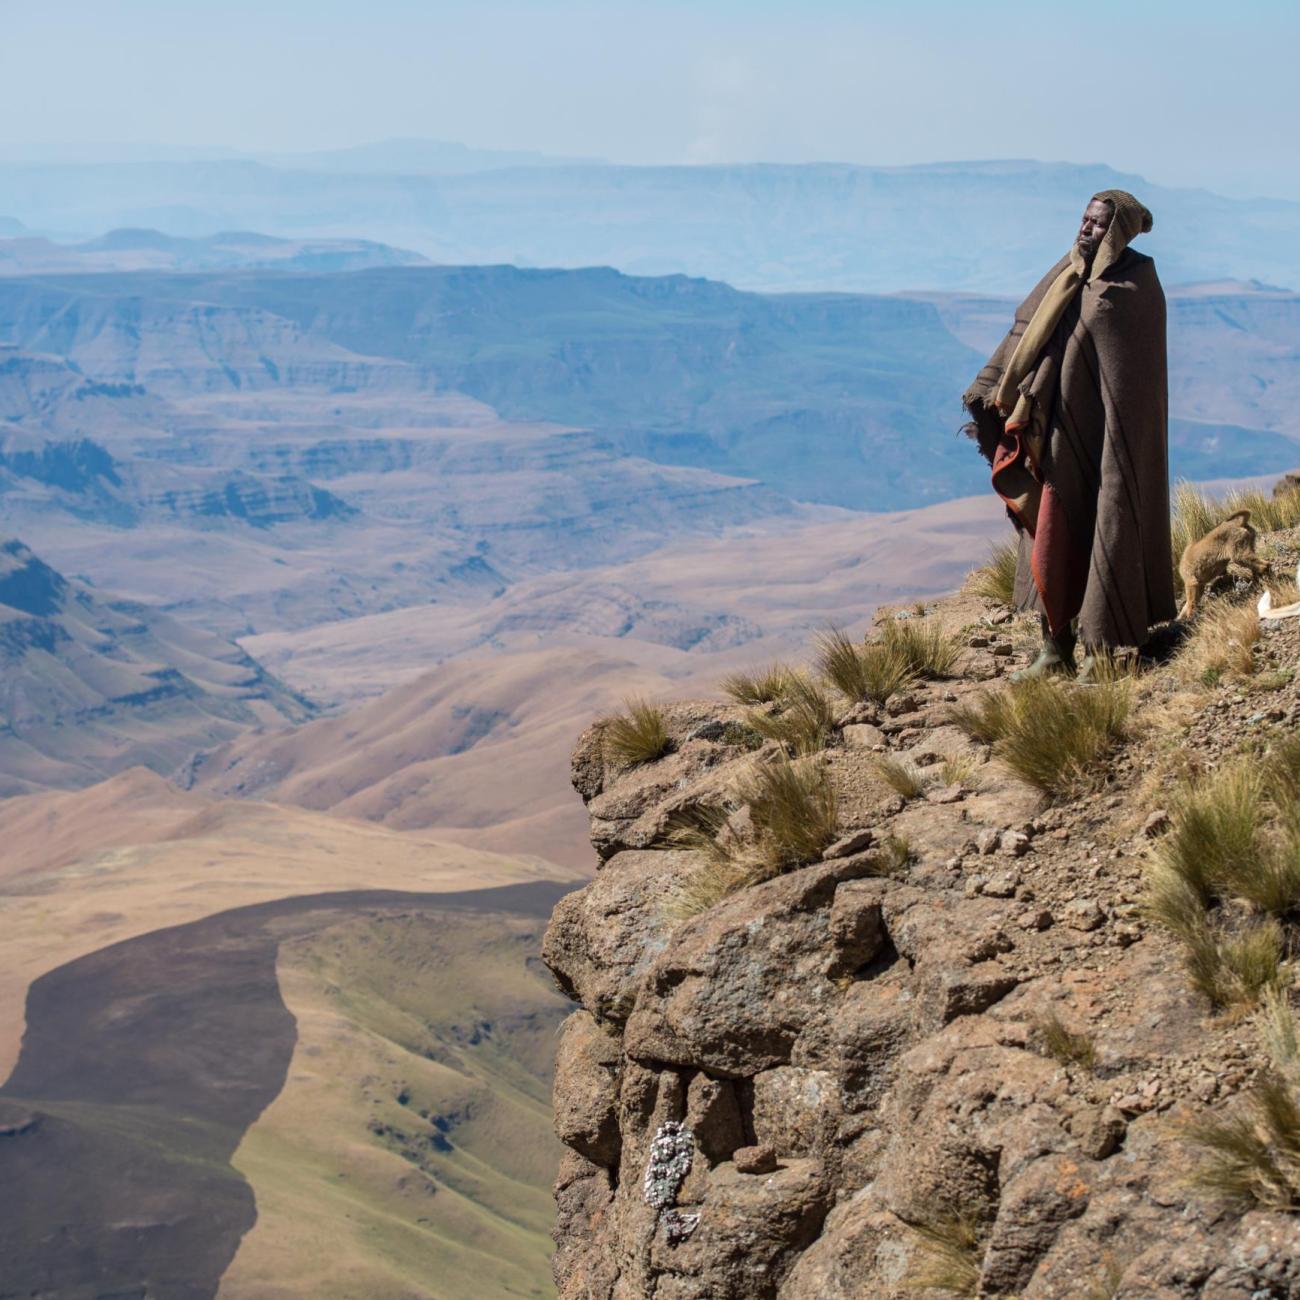 Basotho shepherd and dog looking out from a mountain ledge, in Thaba Tseka, Lesotho. Photo courtesy of Edwin Remsberg